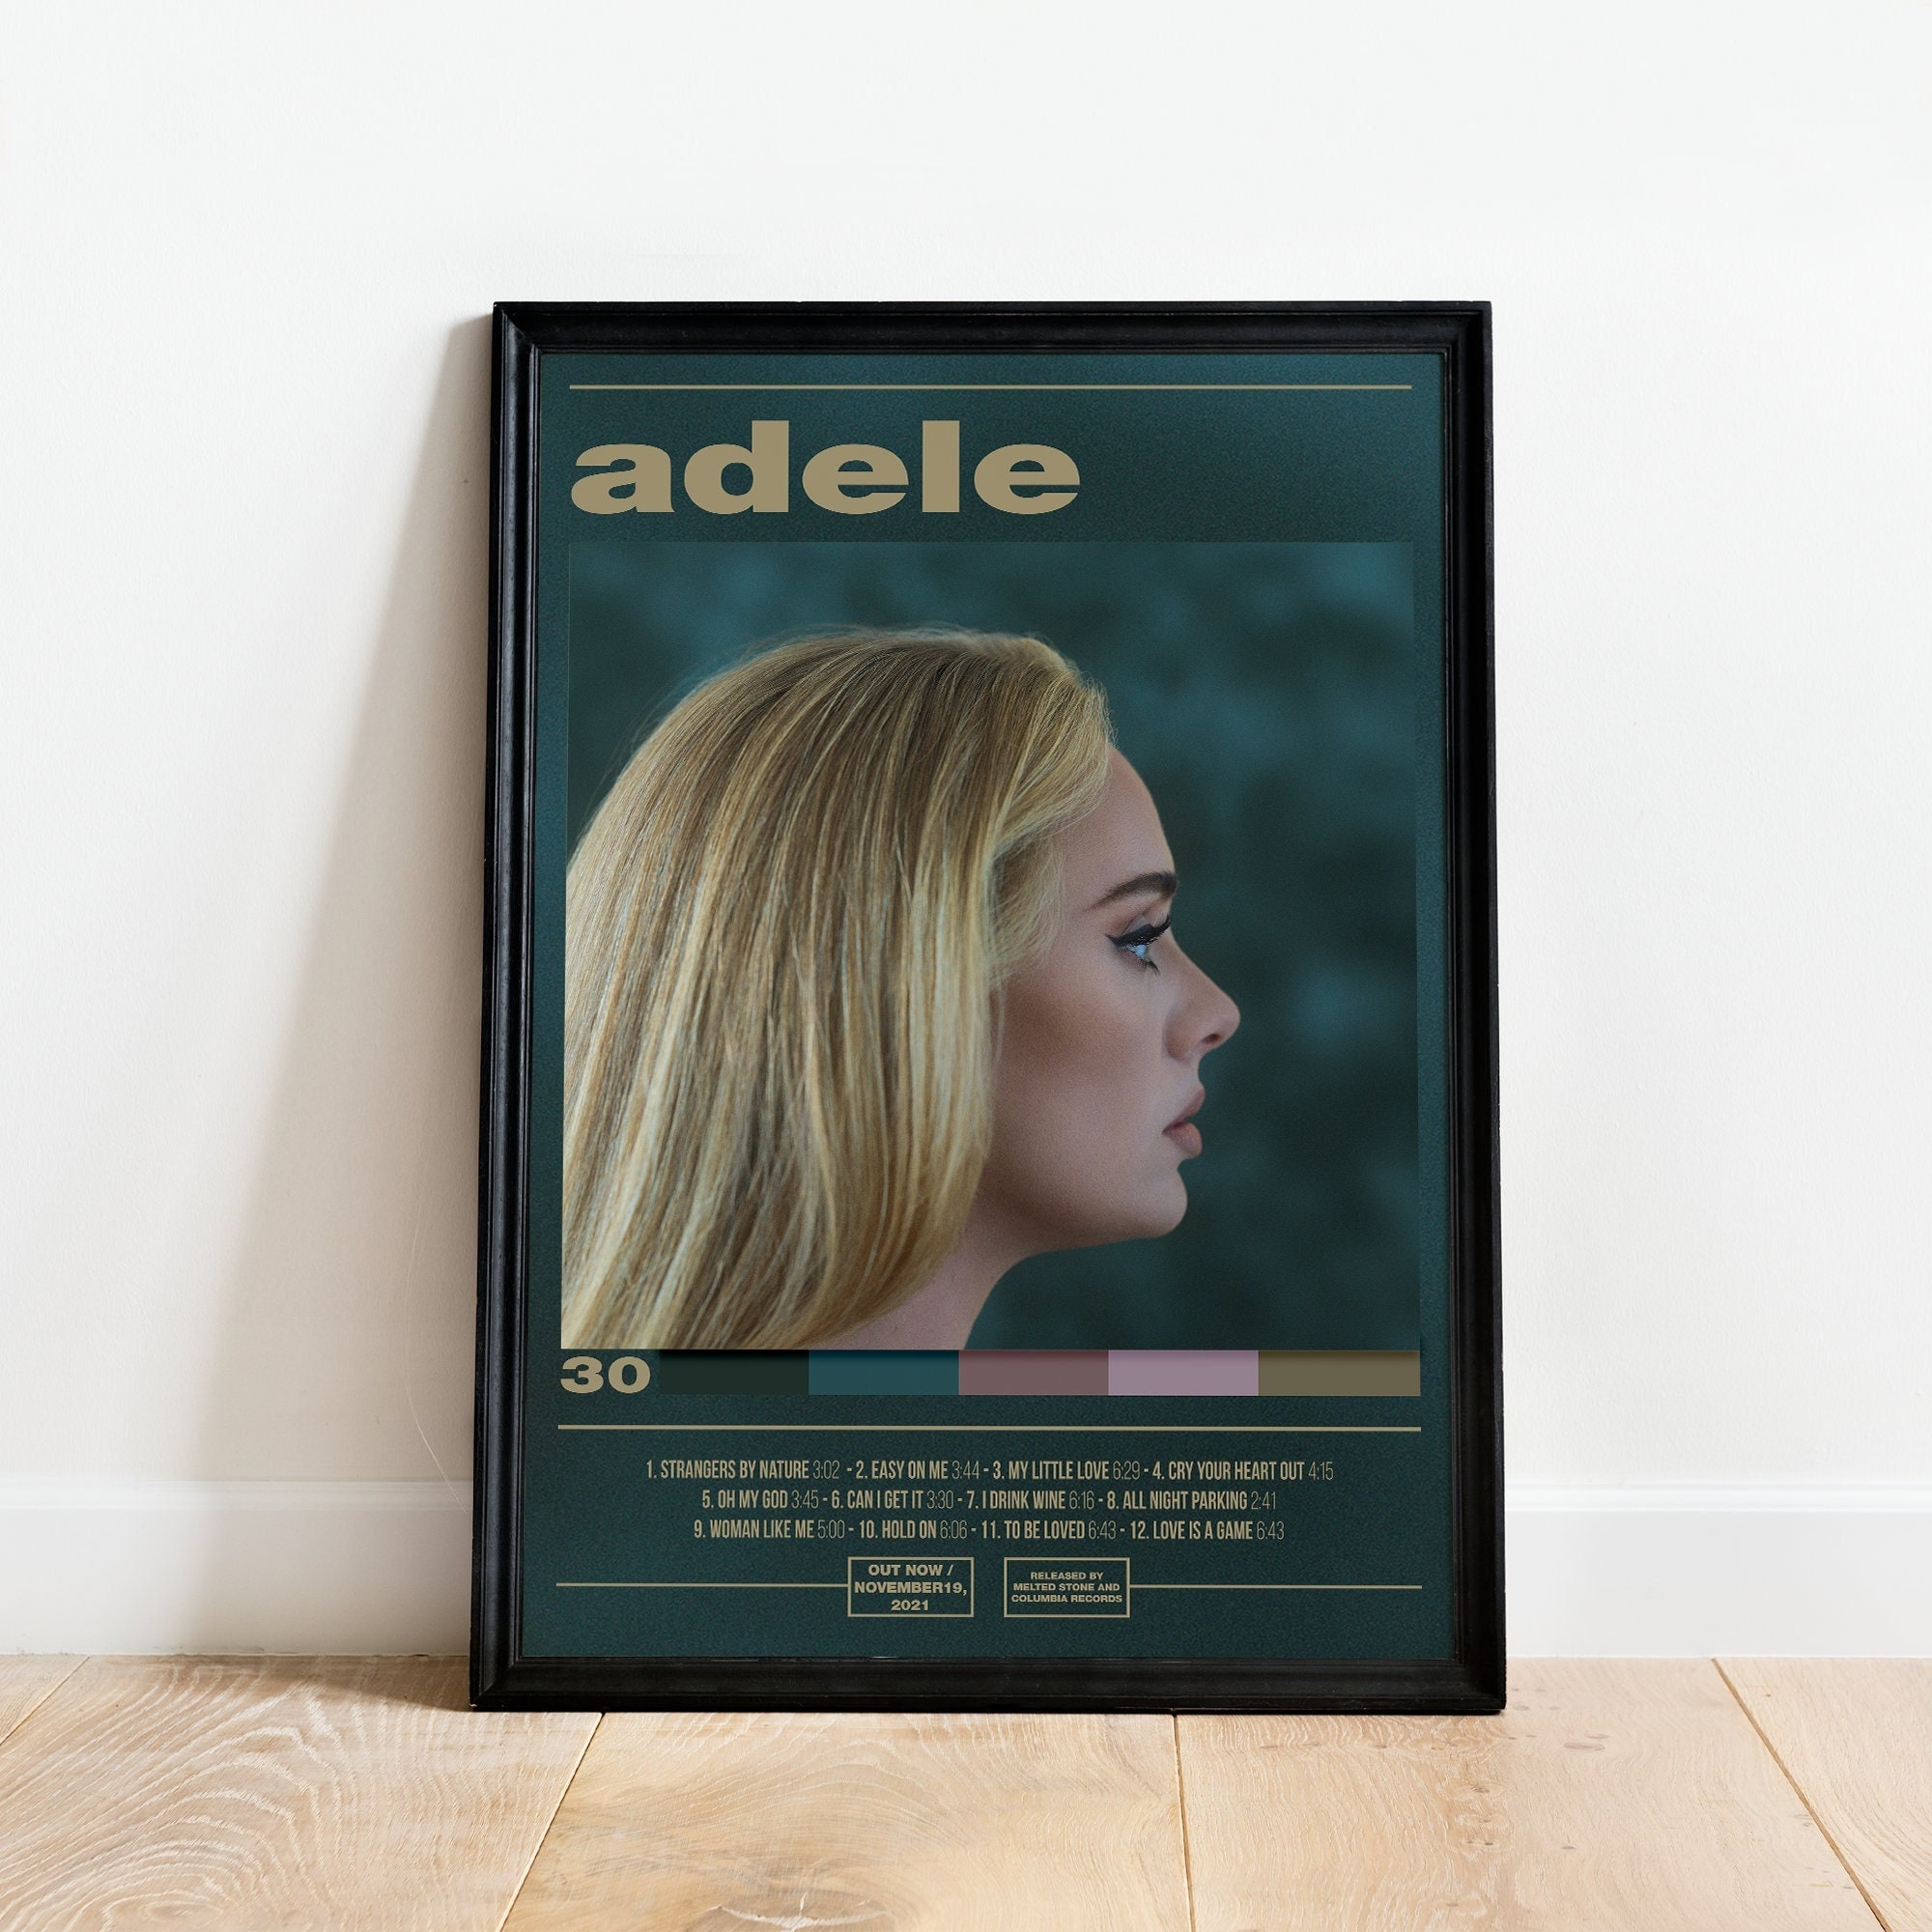 Adele "30 " Album Poster